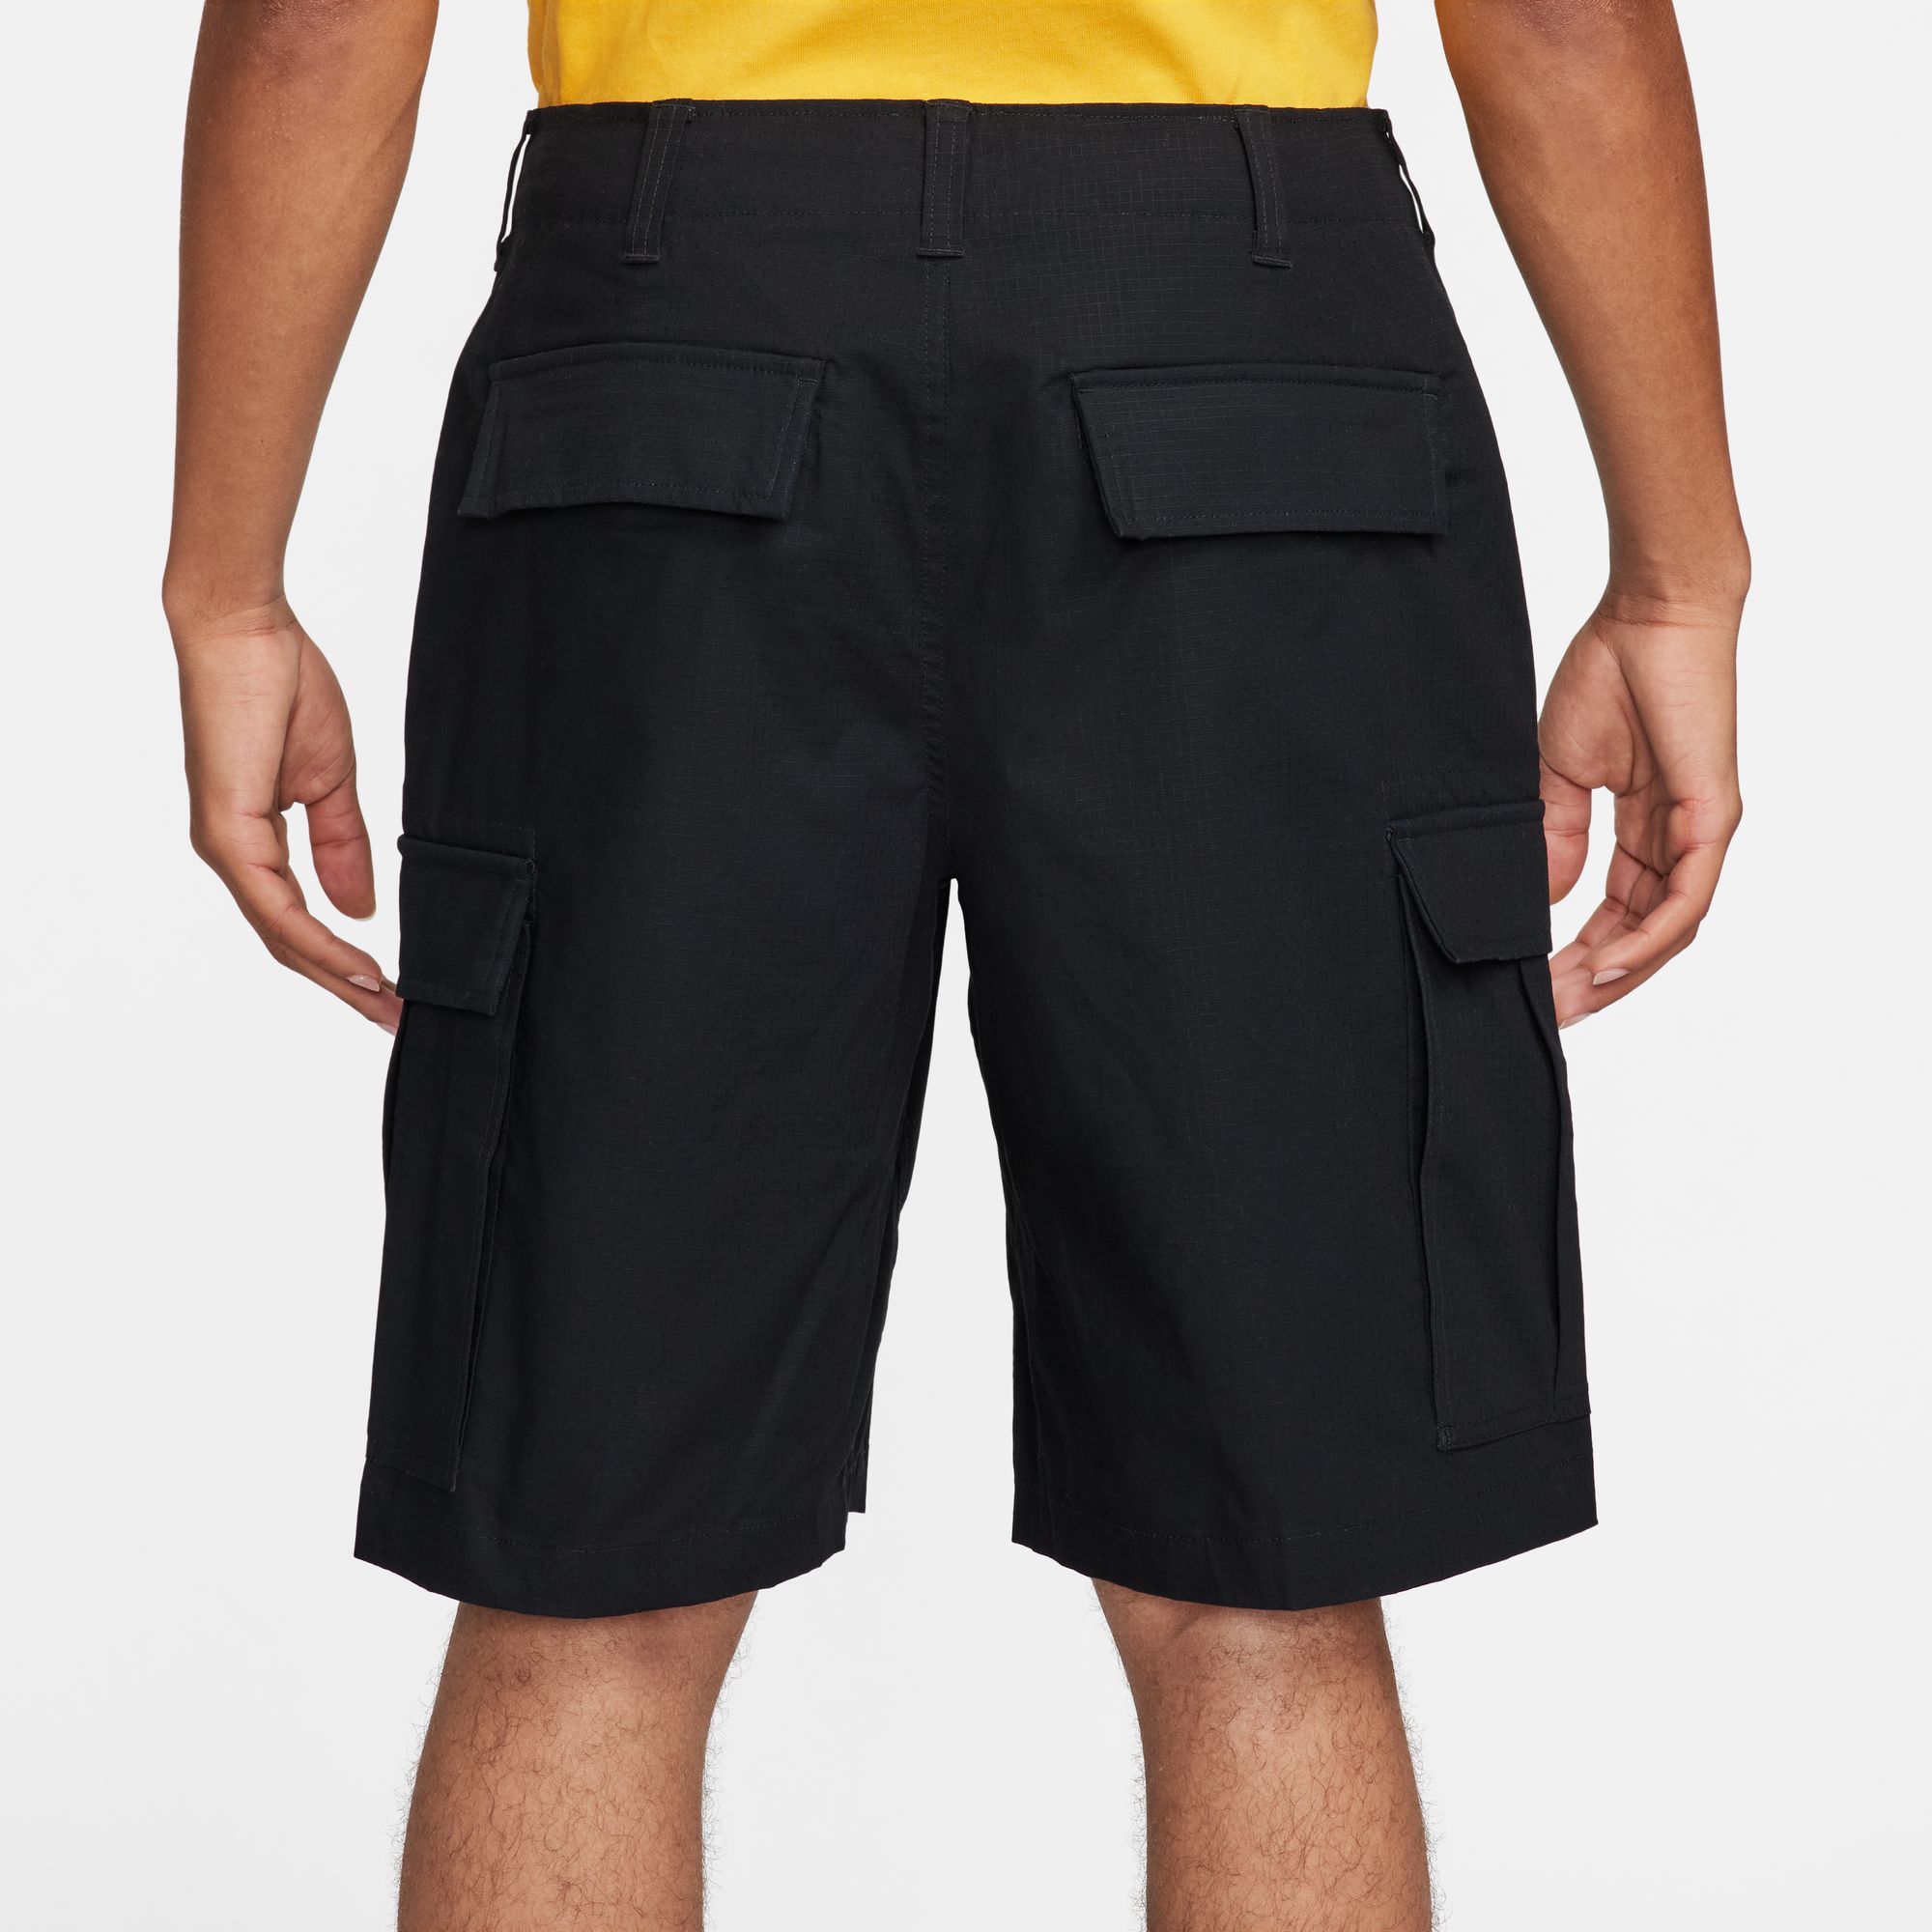 Nike SB Kearny Men's Cargo Skate Shorts Black